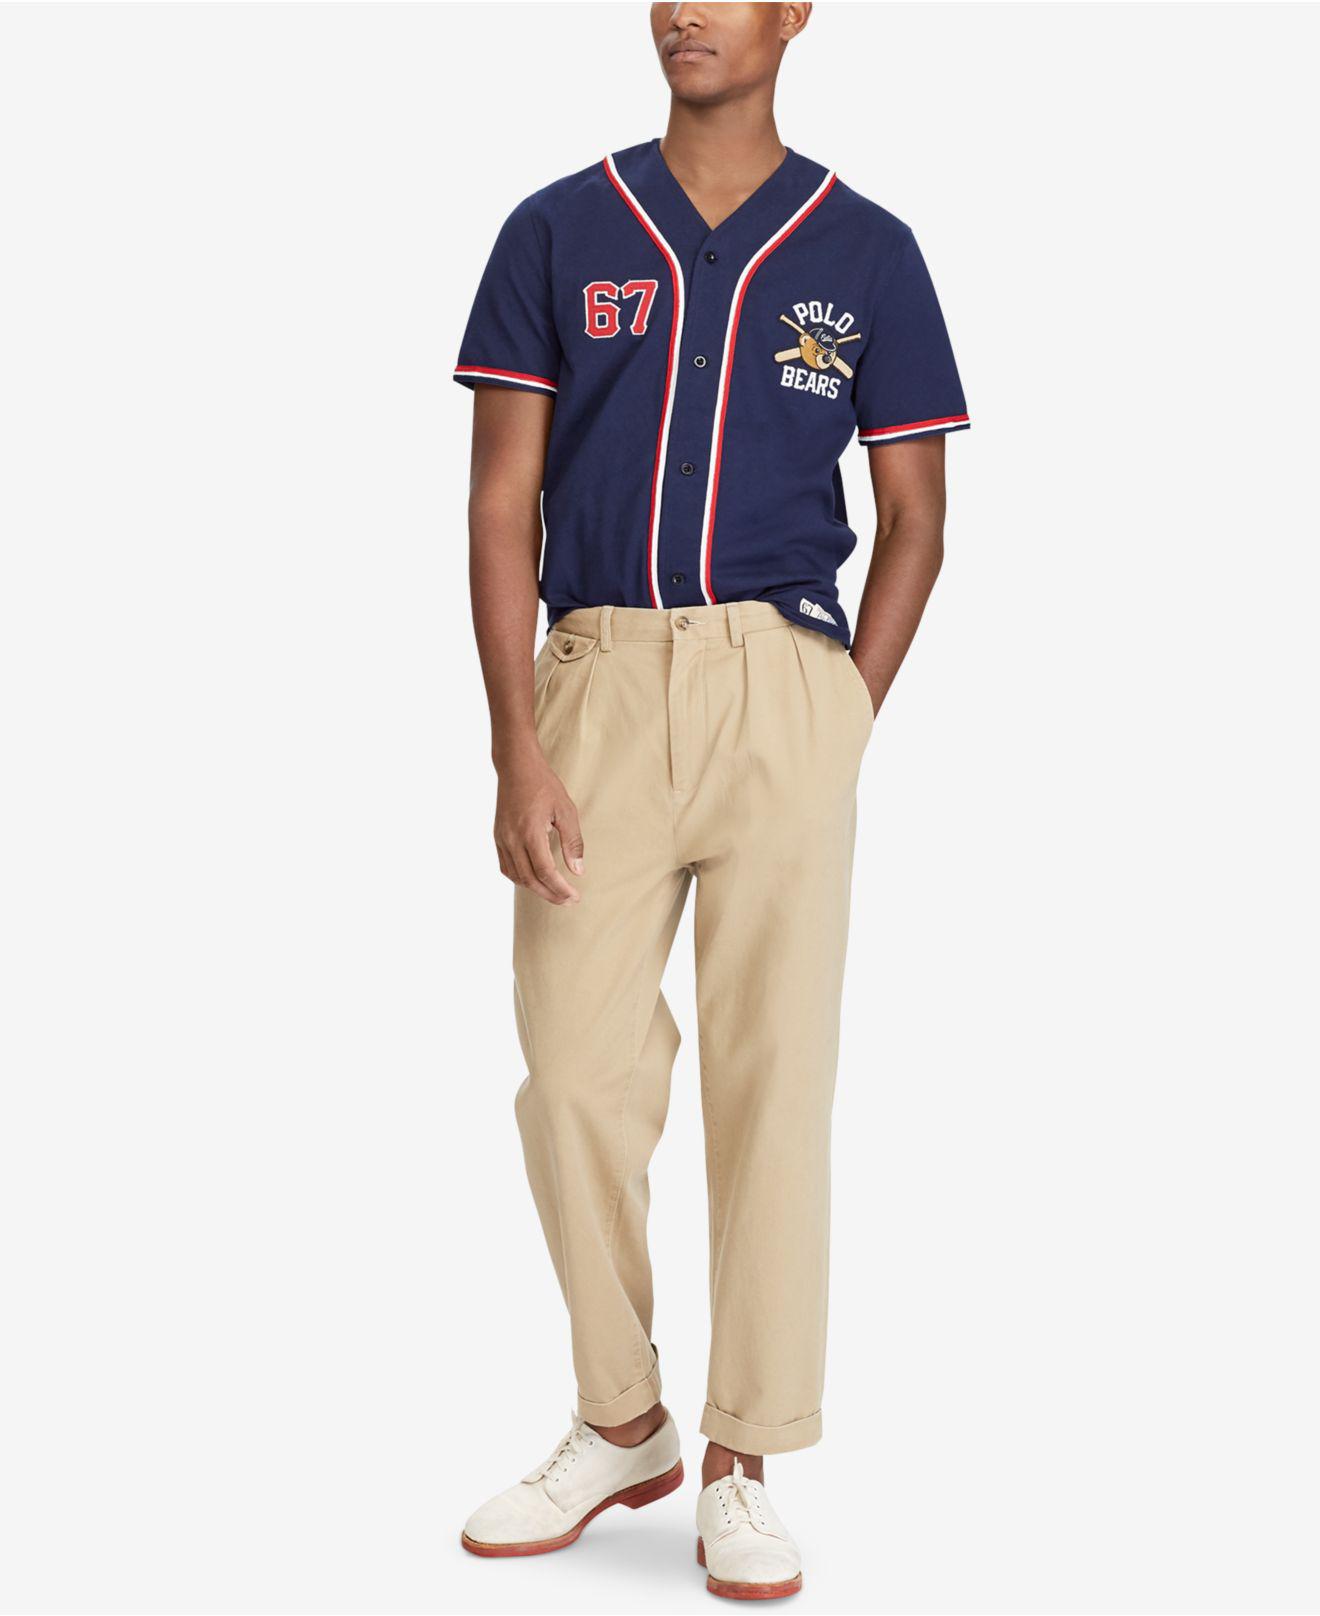 polo bear baseball jersey